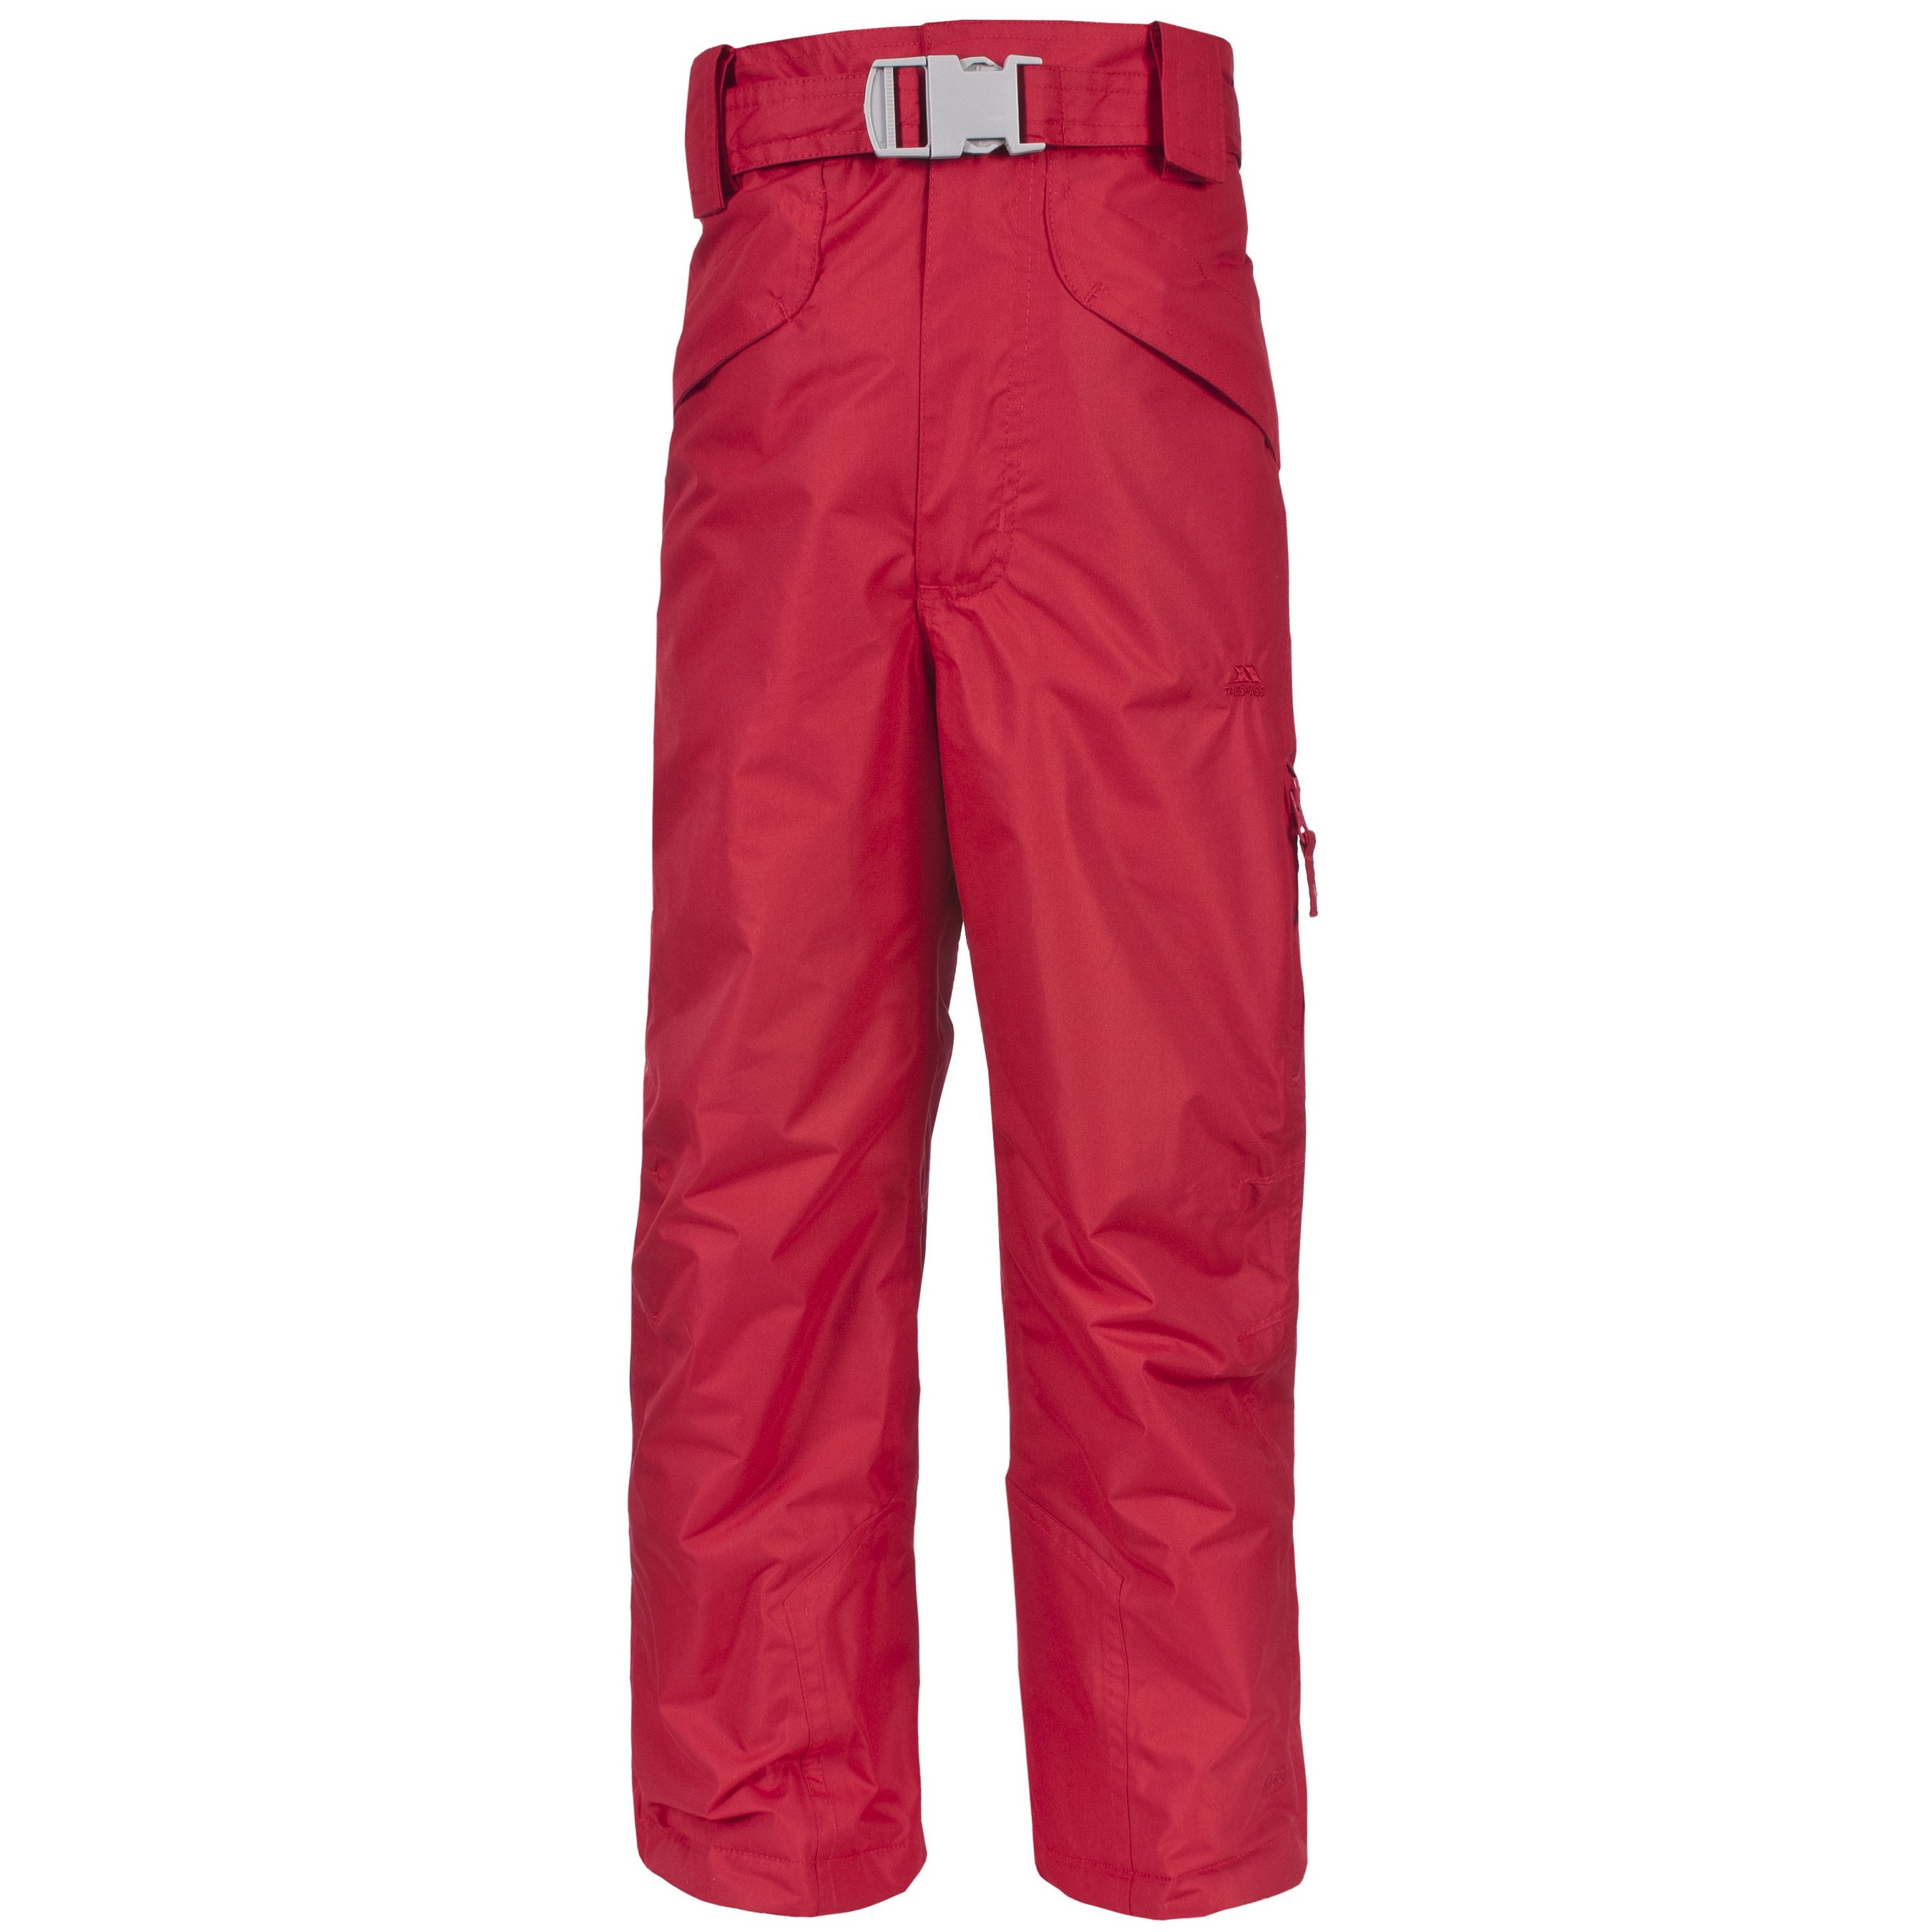 Pantalones De Esquí Impermeables Acolchados Con Tirantes Desmontables